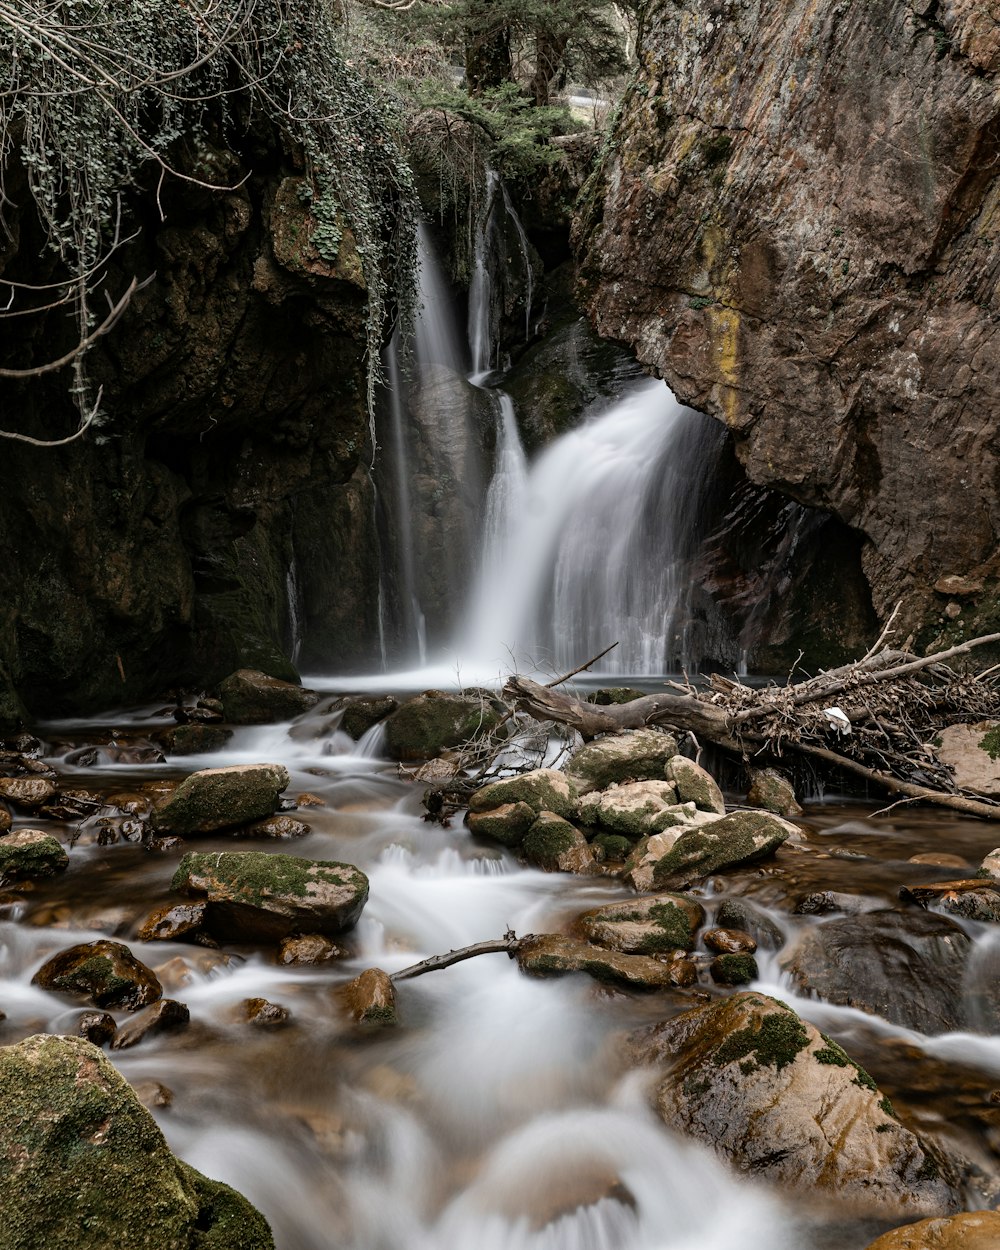 water falls between brown rocks